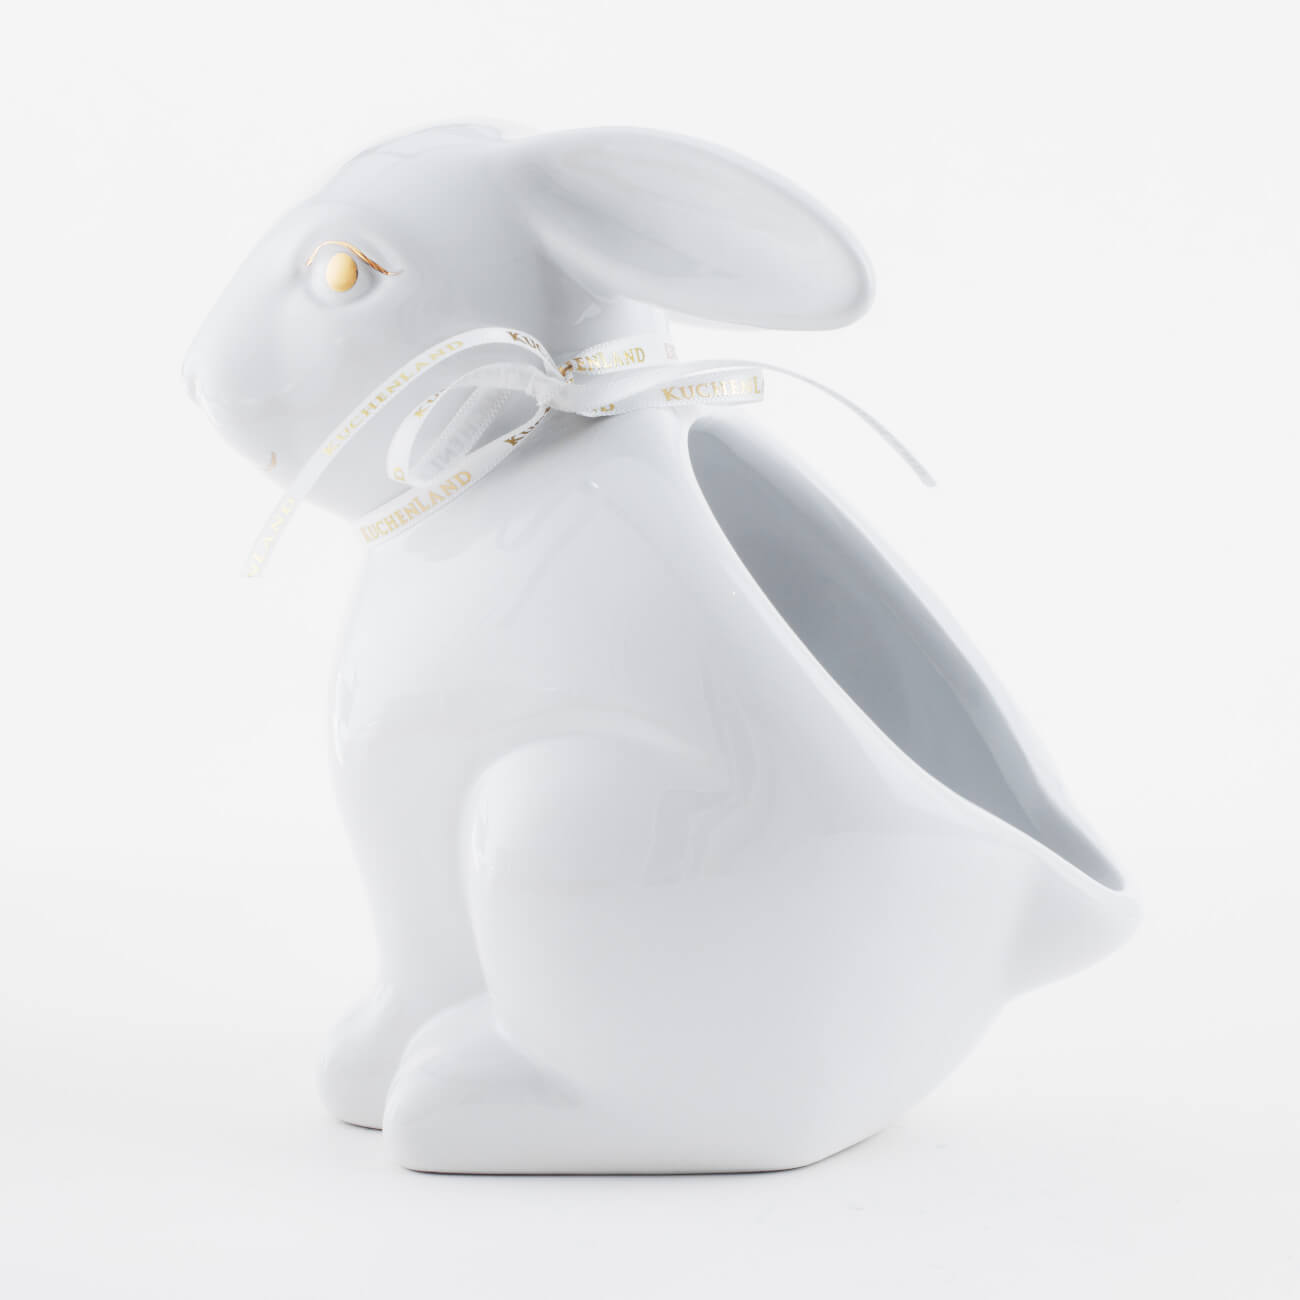 Конфетница, 17х17 см, керамика, белая, Кролик, Easter gold конфетница 12х14 см с ручкой керамика белая кролик на корзине easter gold